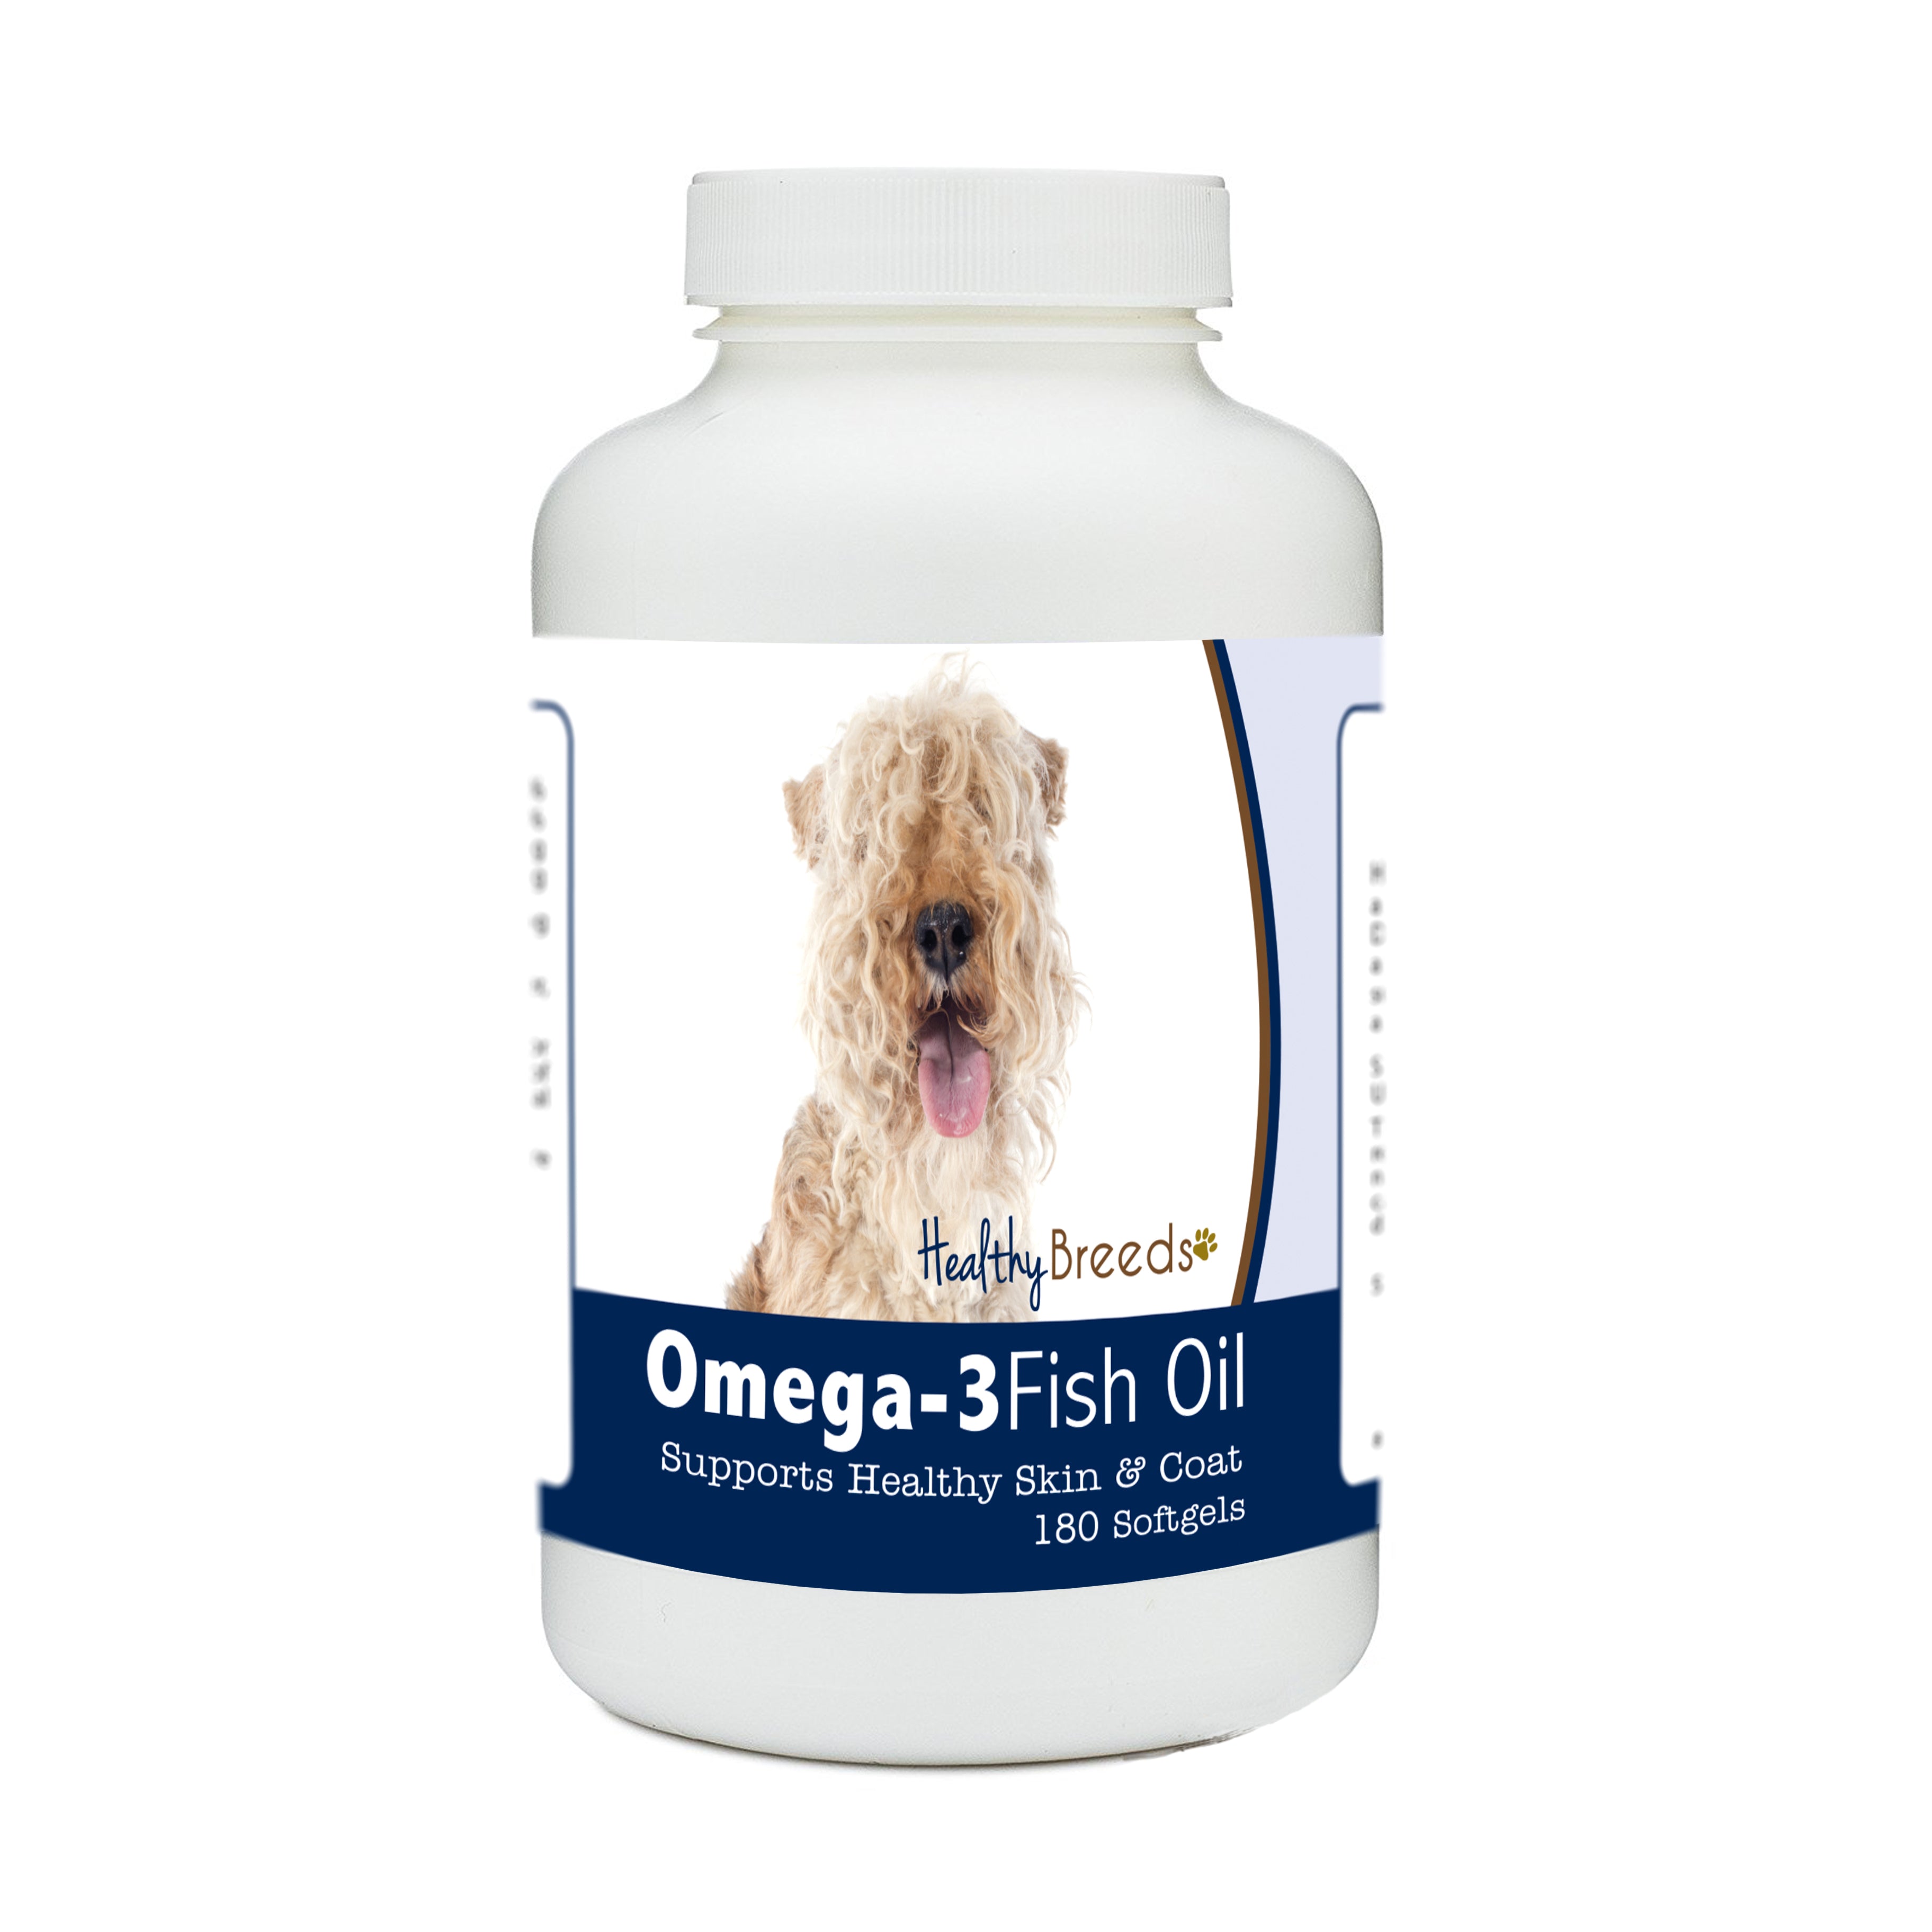 Lakeland Terrier Omega-3 Fish Oil Softgels 180 Count